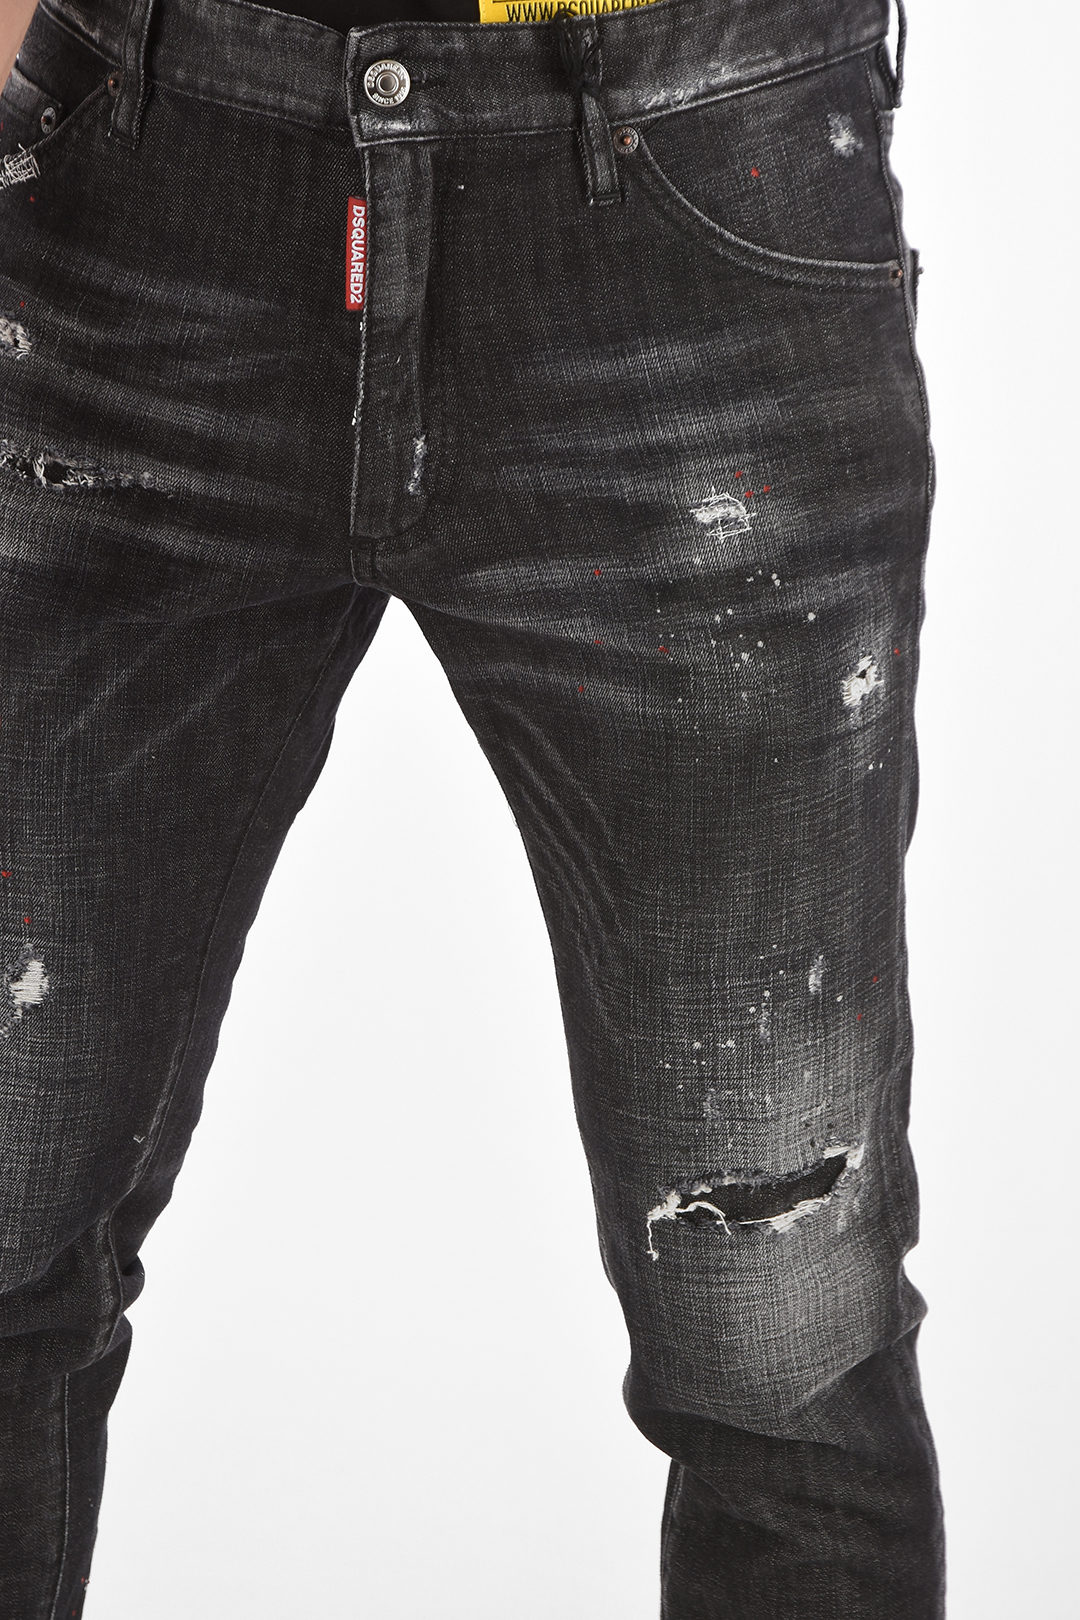 leerplan meesterwerk beproeving Dsquared2 16cm stretch denim COOL GUY distressed jeans herren - Glamood  Outlet